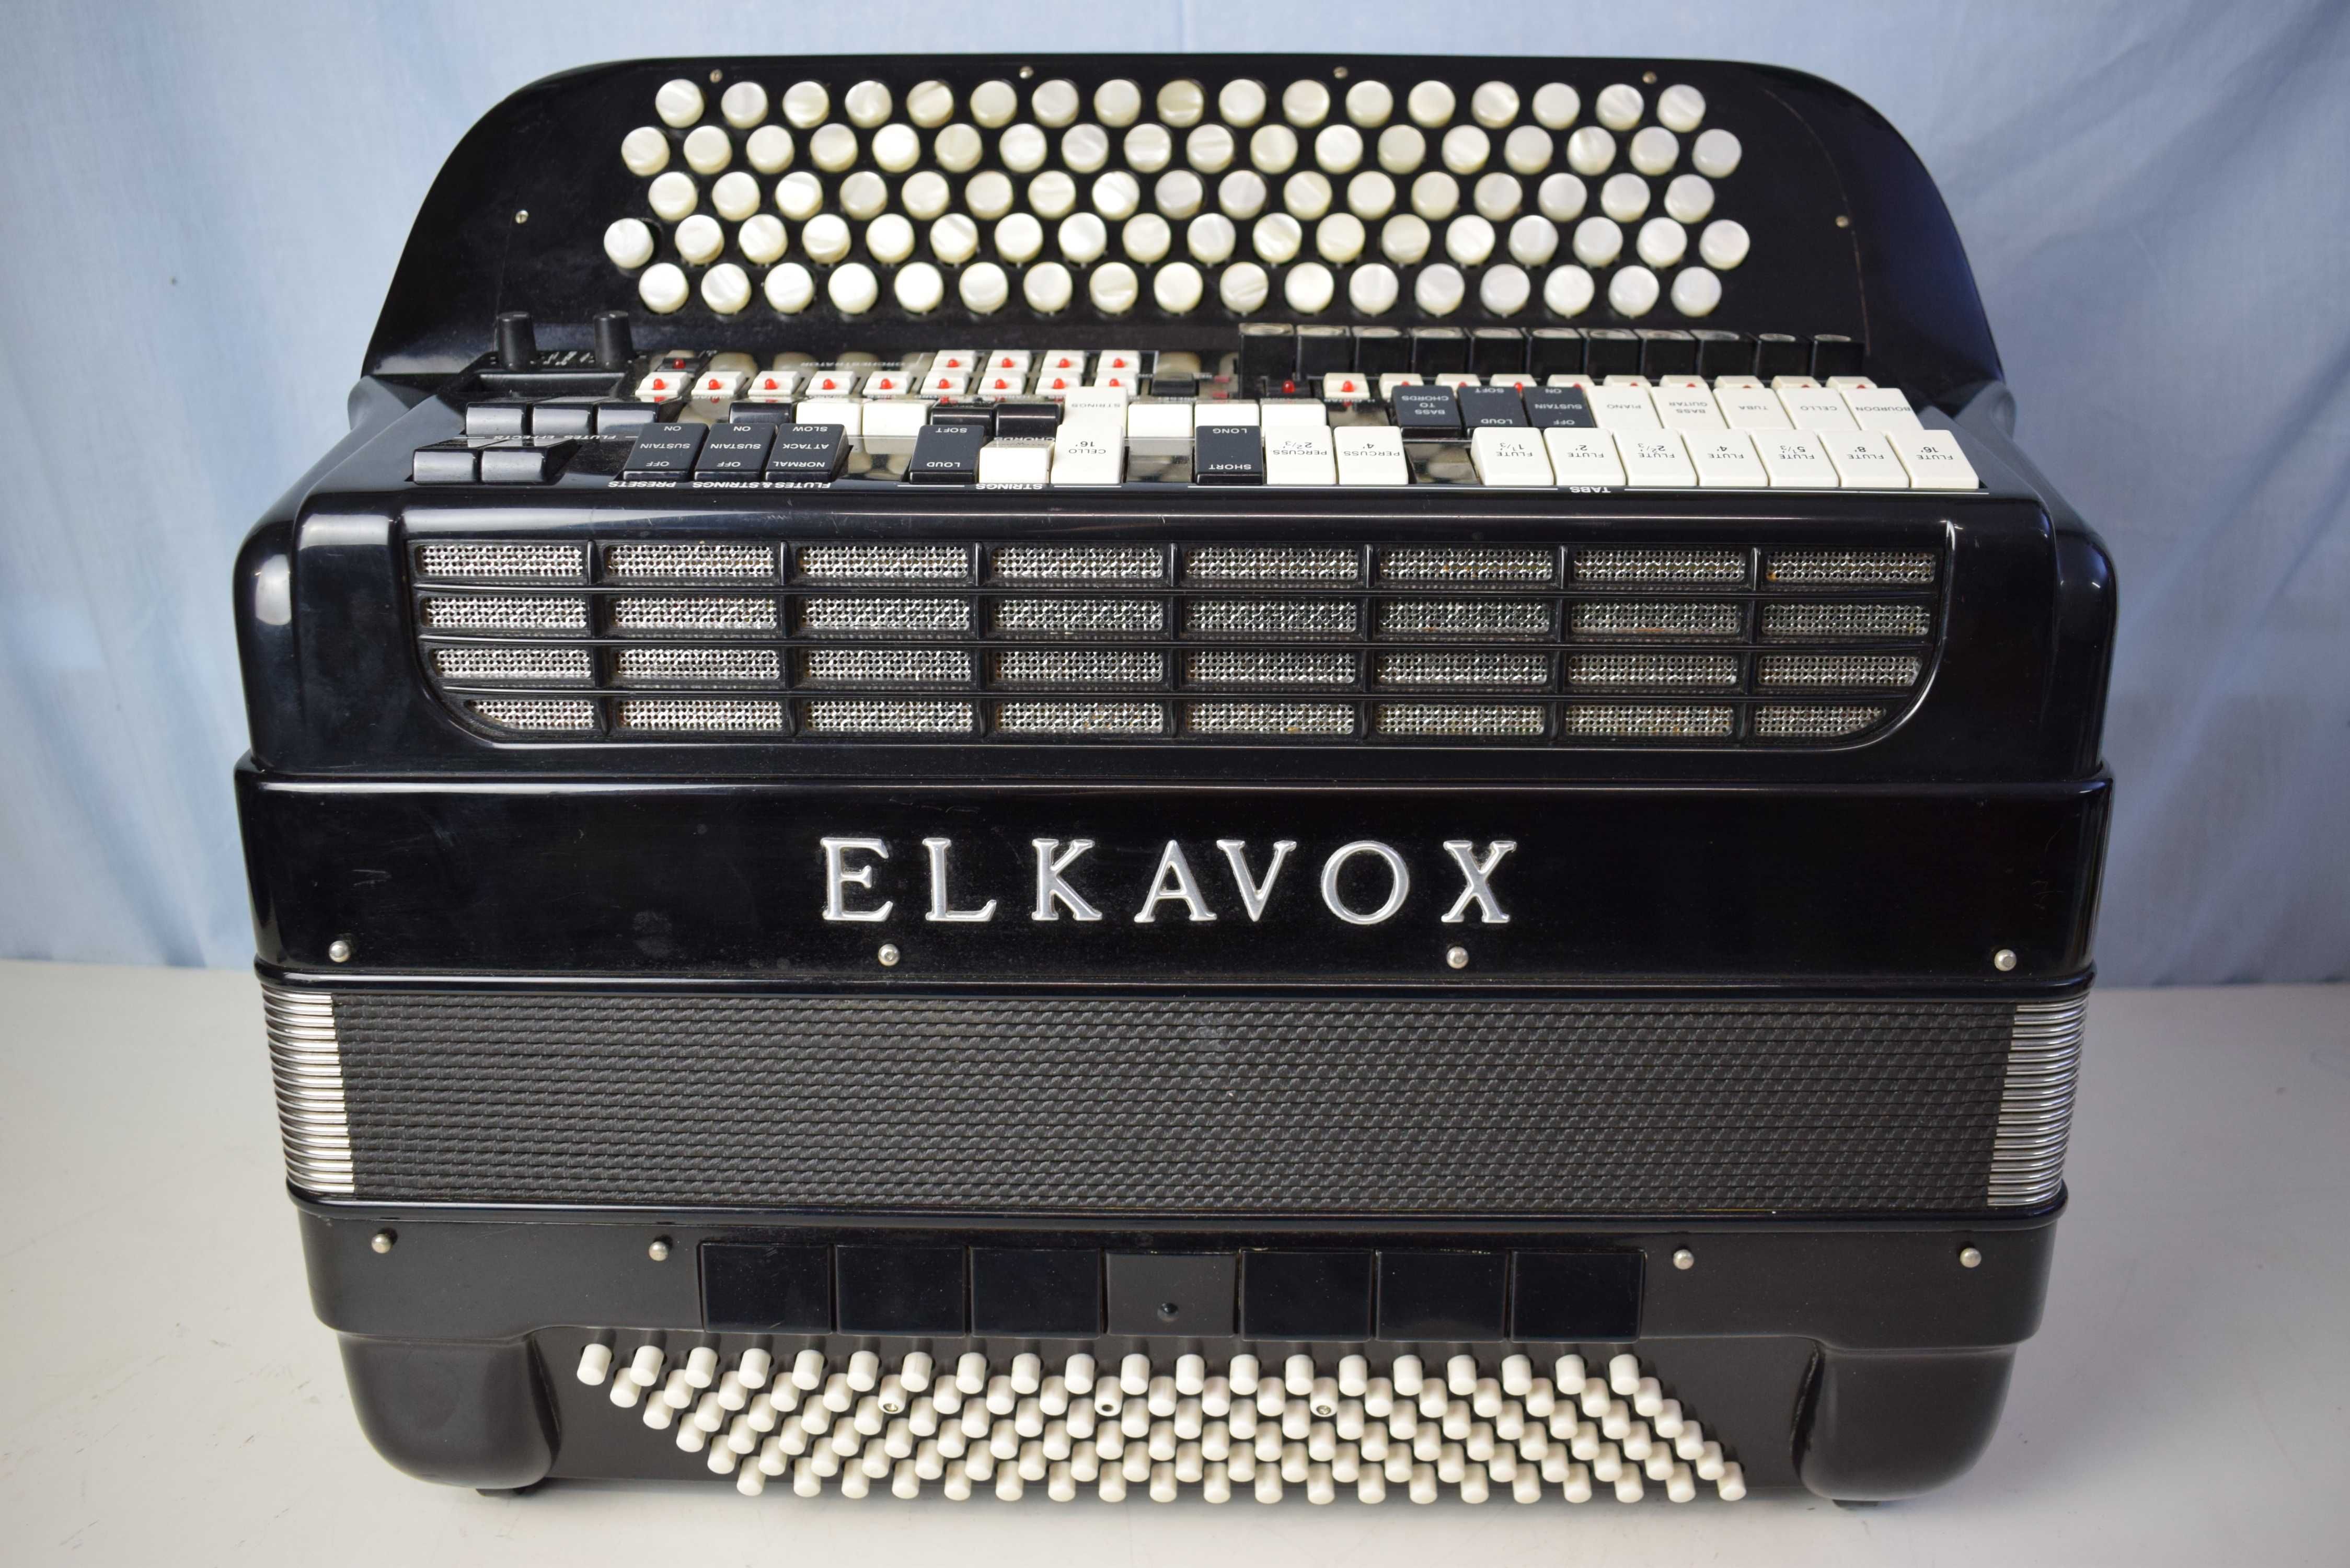 Elkavox 83 4 Voz, N 208